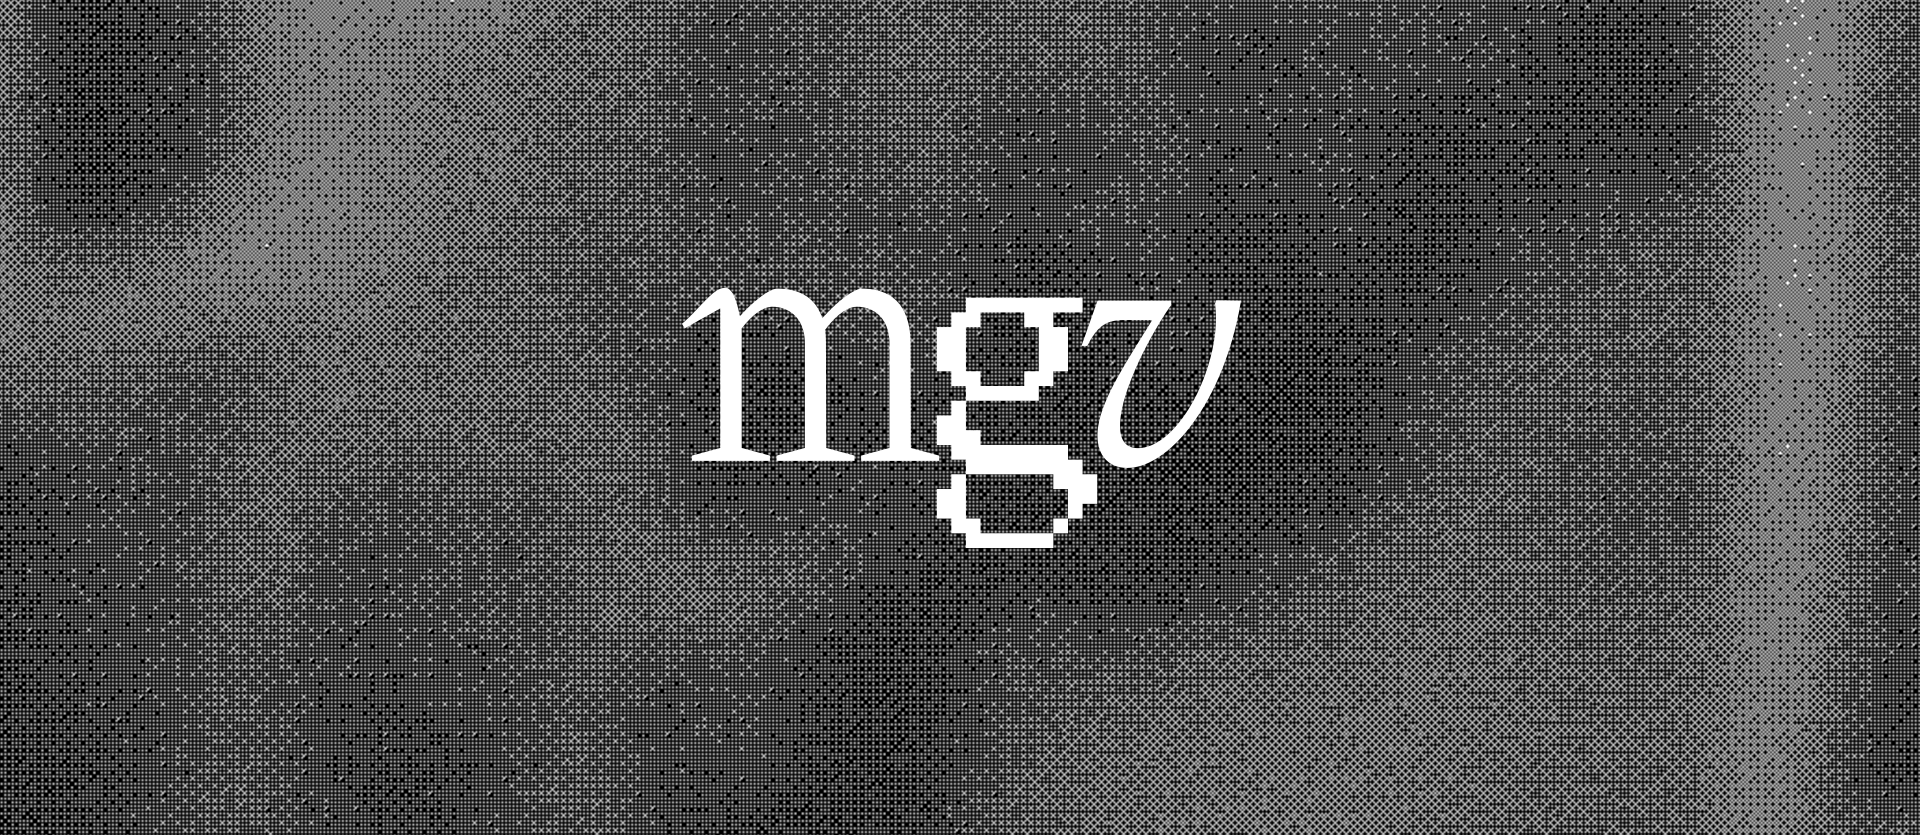 Magrossevie-mgv-podcast-grossophobie-lgbt-adrienducrocq-lille-cover-pixel-digital